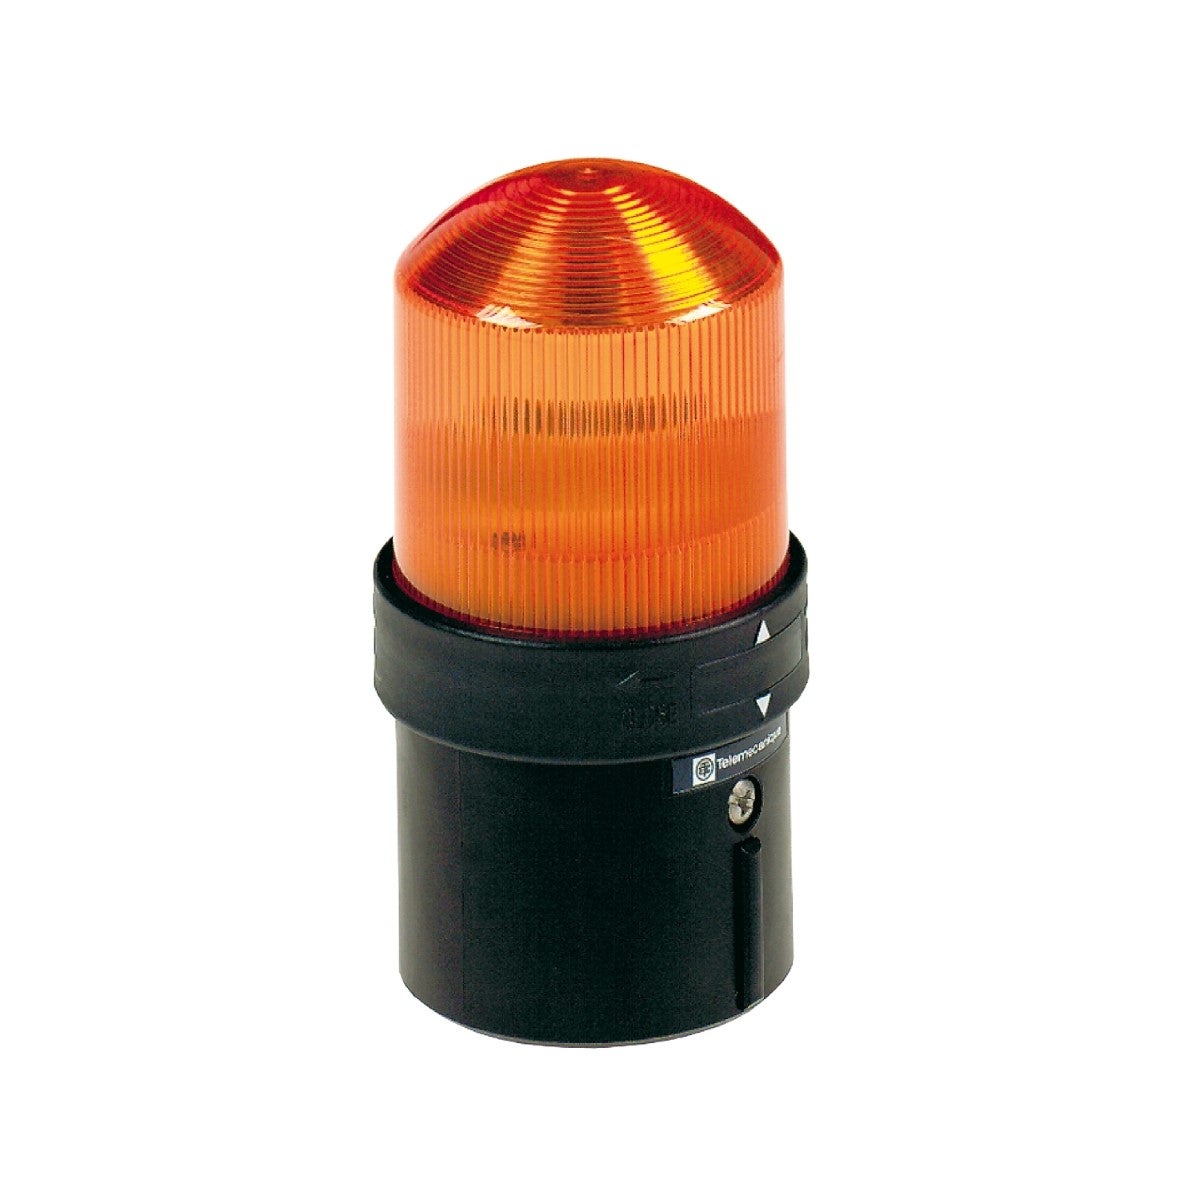 illuminated unit for modular tower lights, Harmony XVB, plastic, orange, 70mm, flashing, integral LED, 24V AC/DC